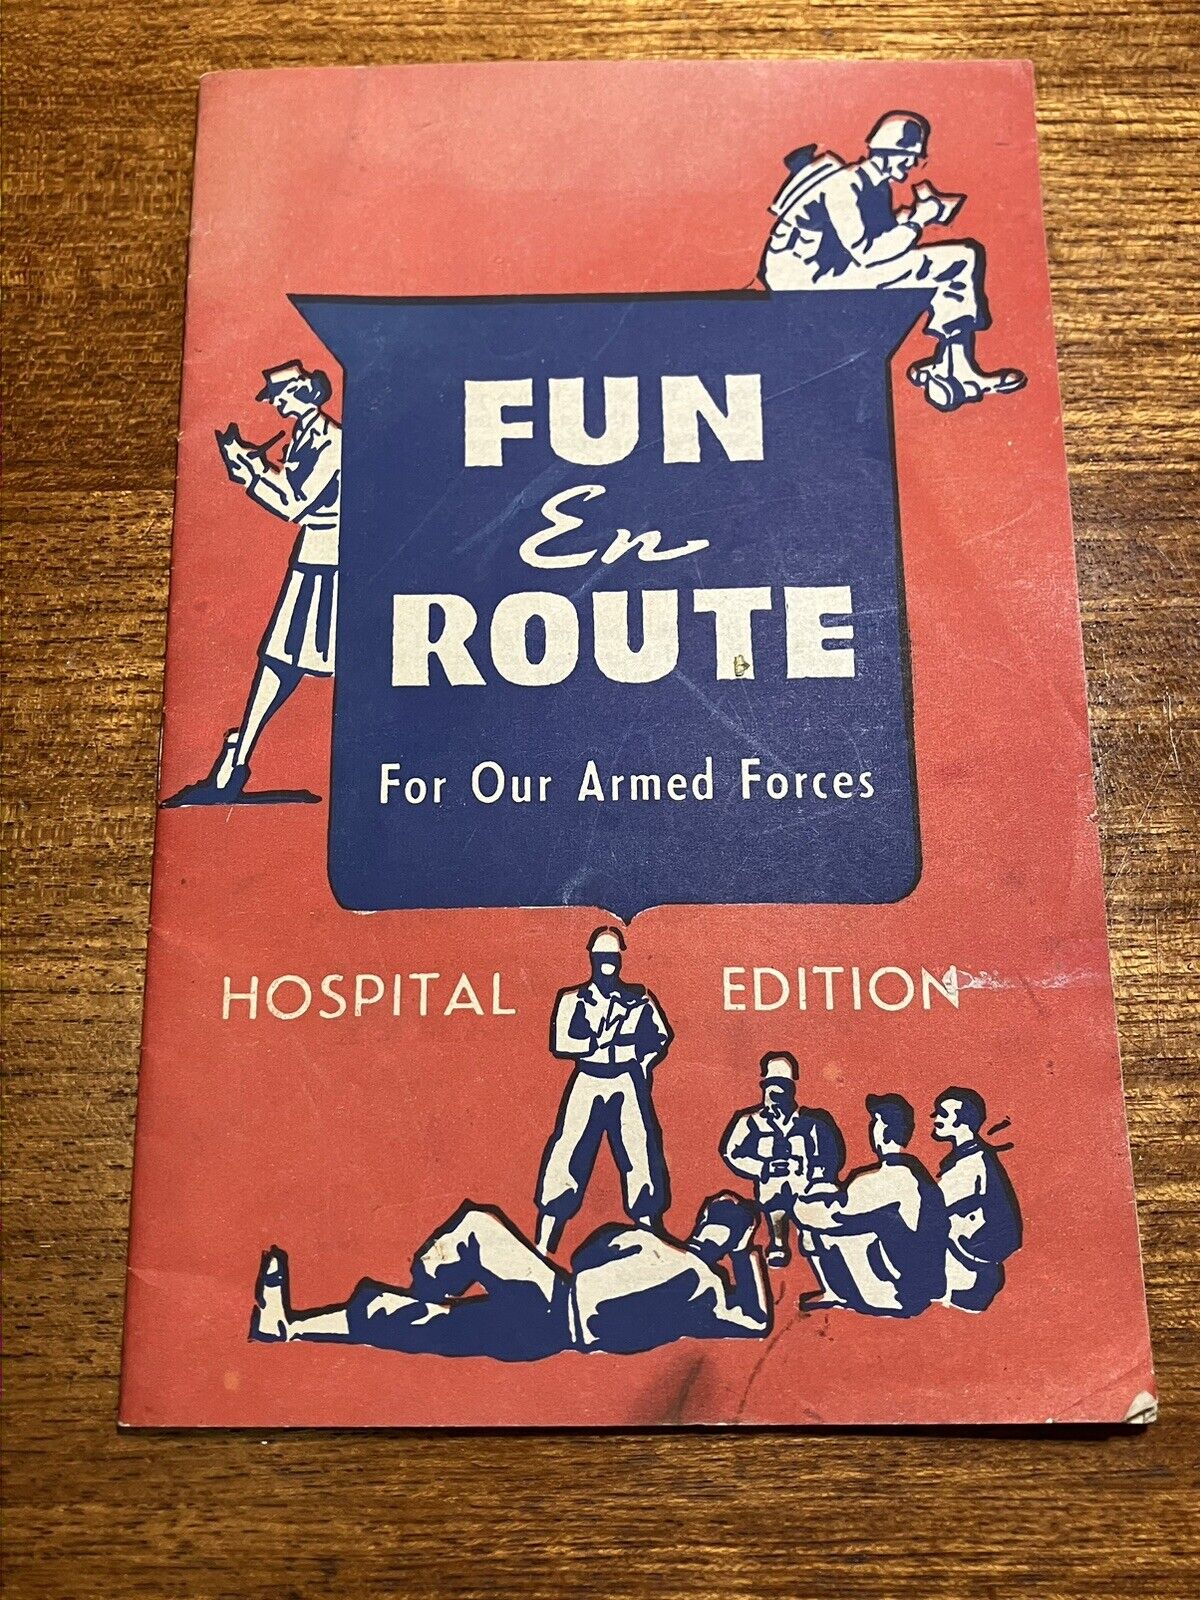 Vintage Fun En Route Us Armed Forces Entertainment Booklet ‘Hospital Edition’